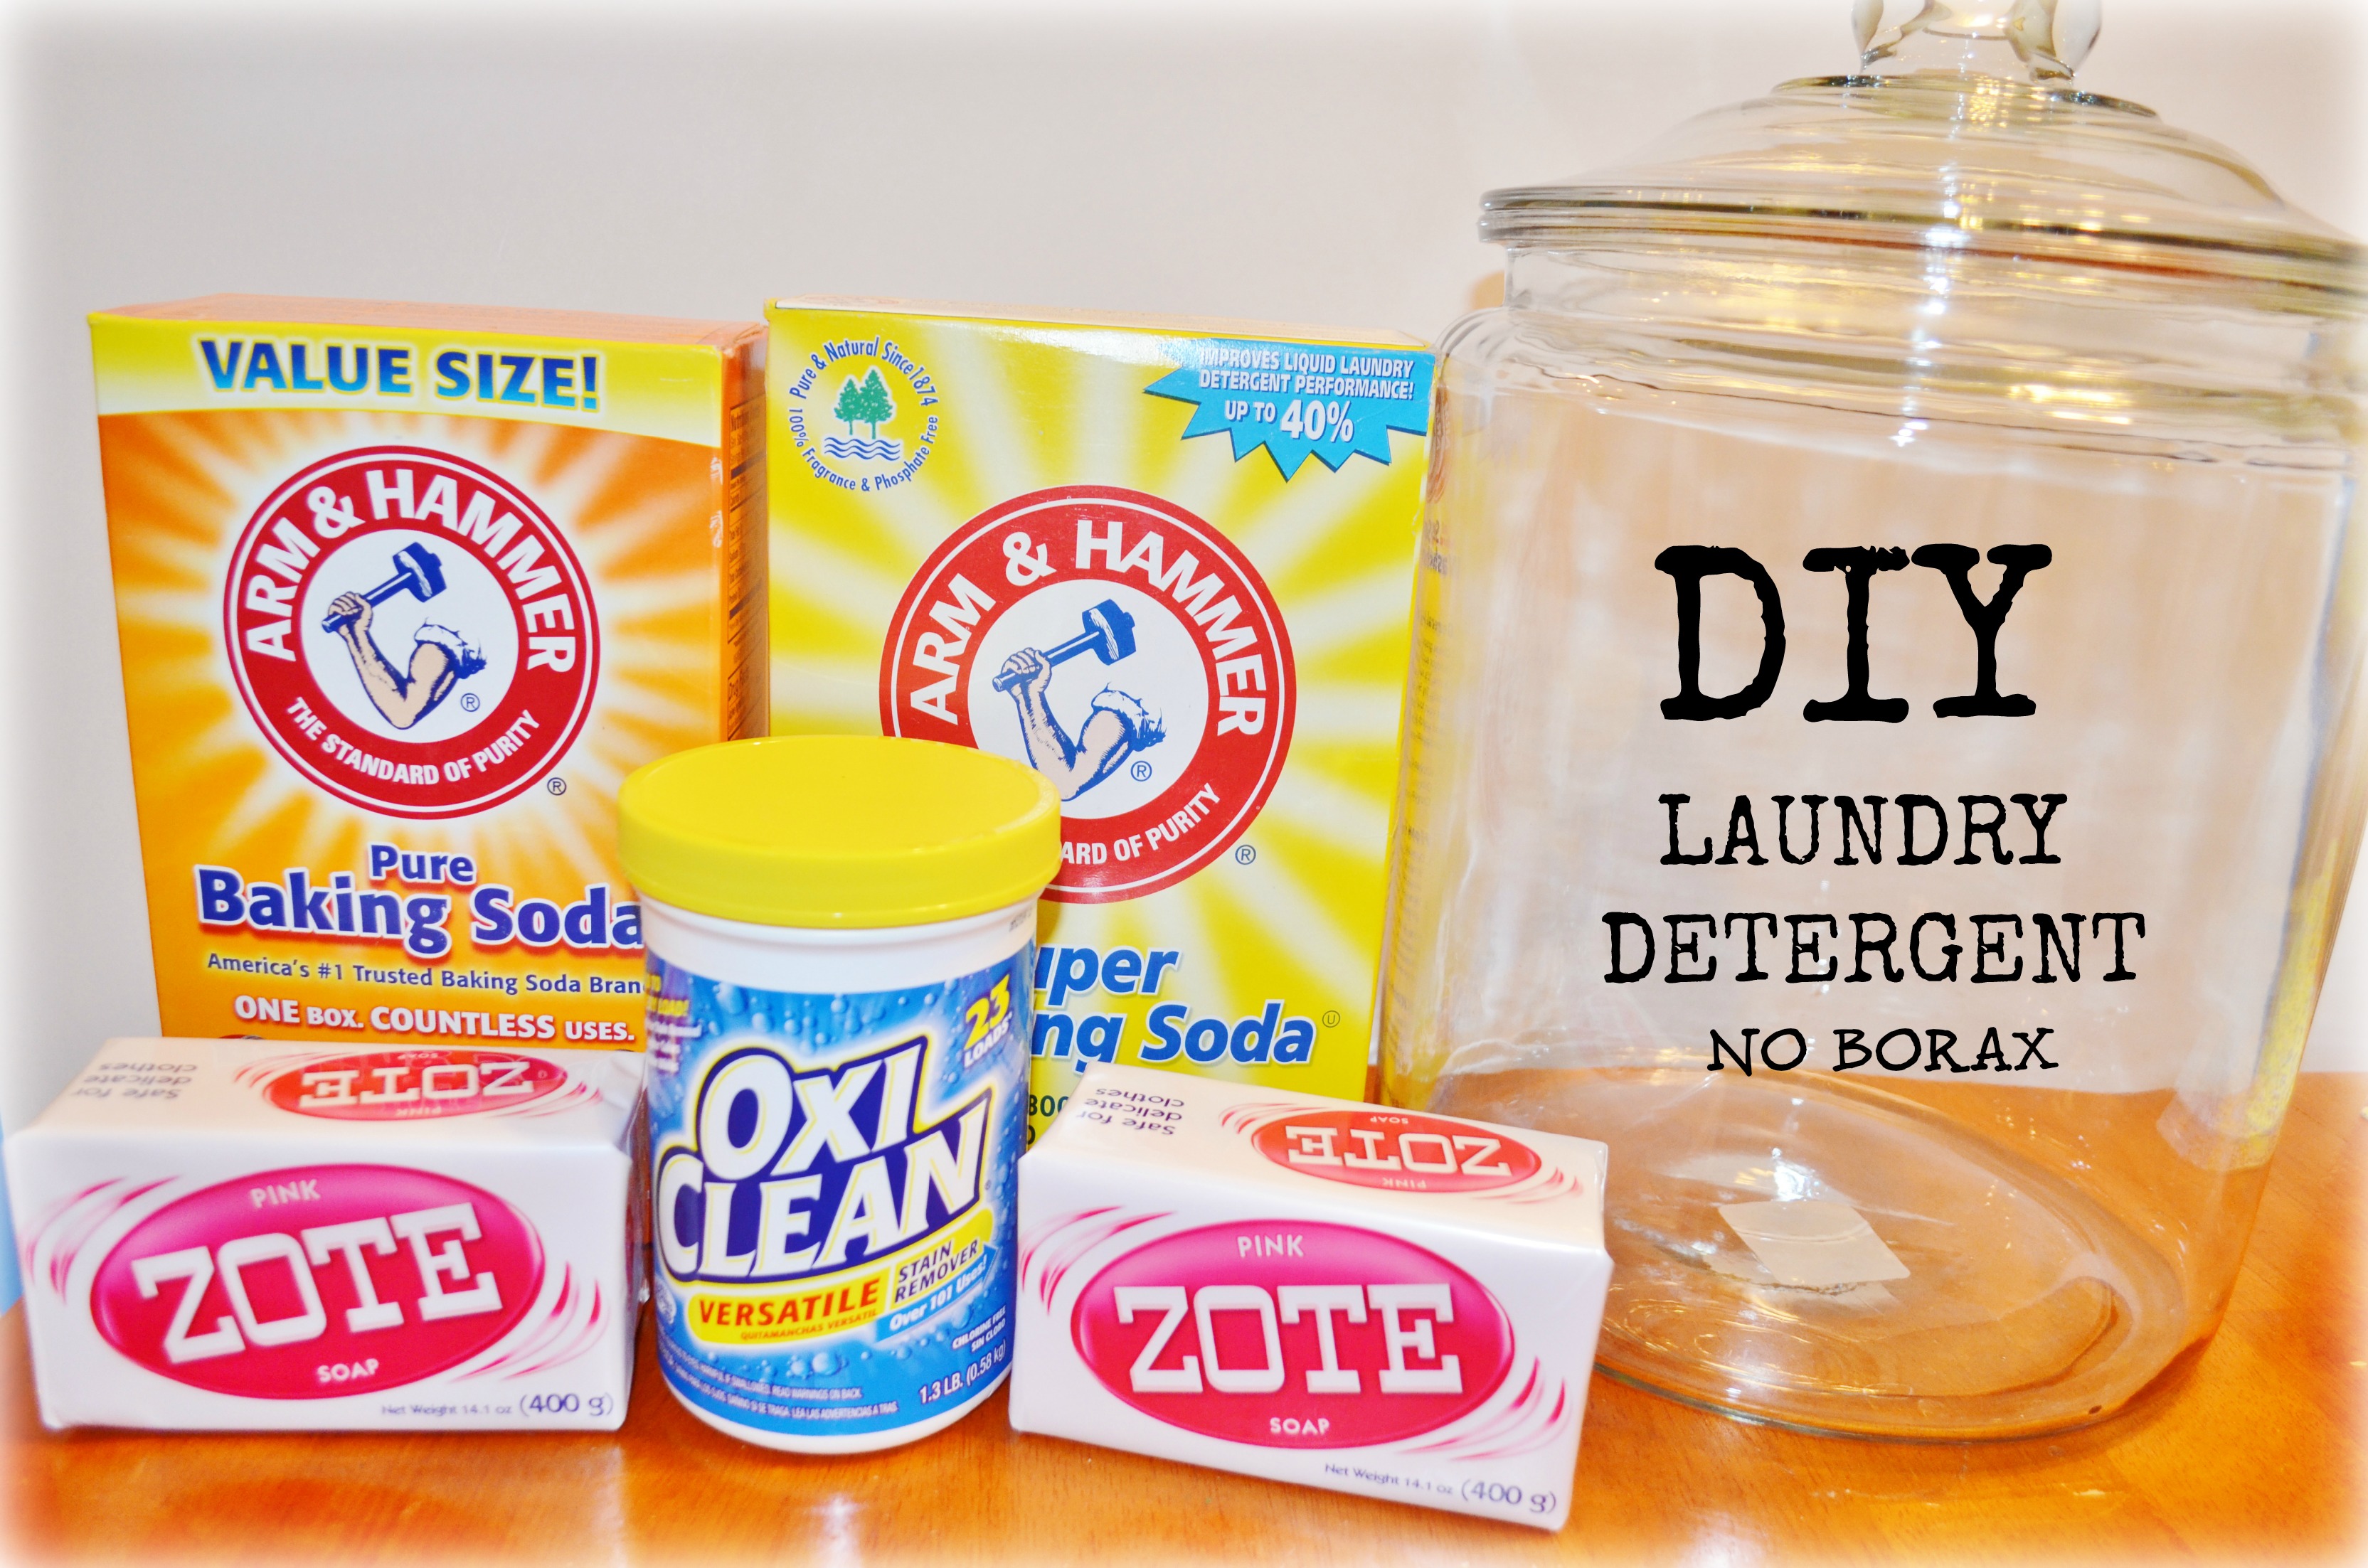 Diy Homemade Laundry Detergent Recipe No Borax